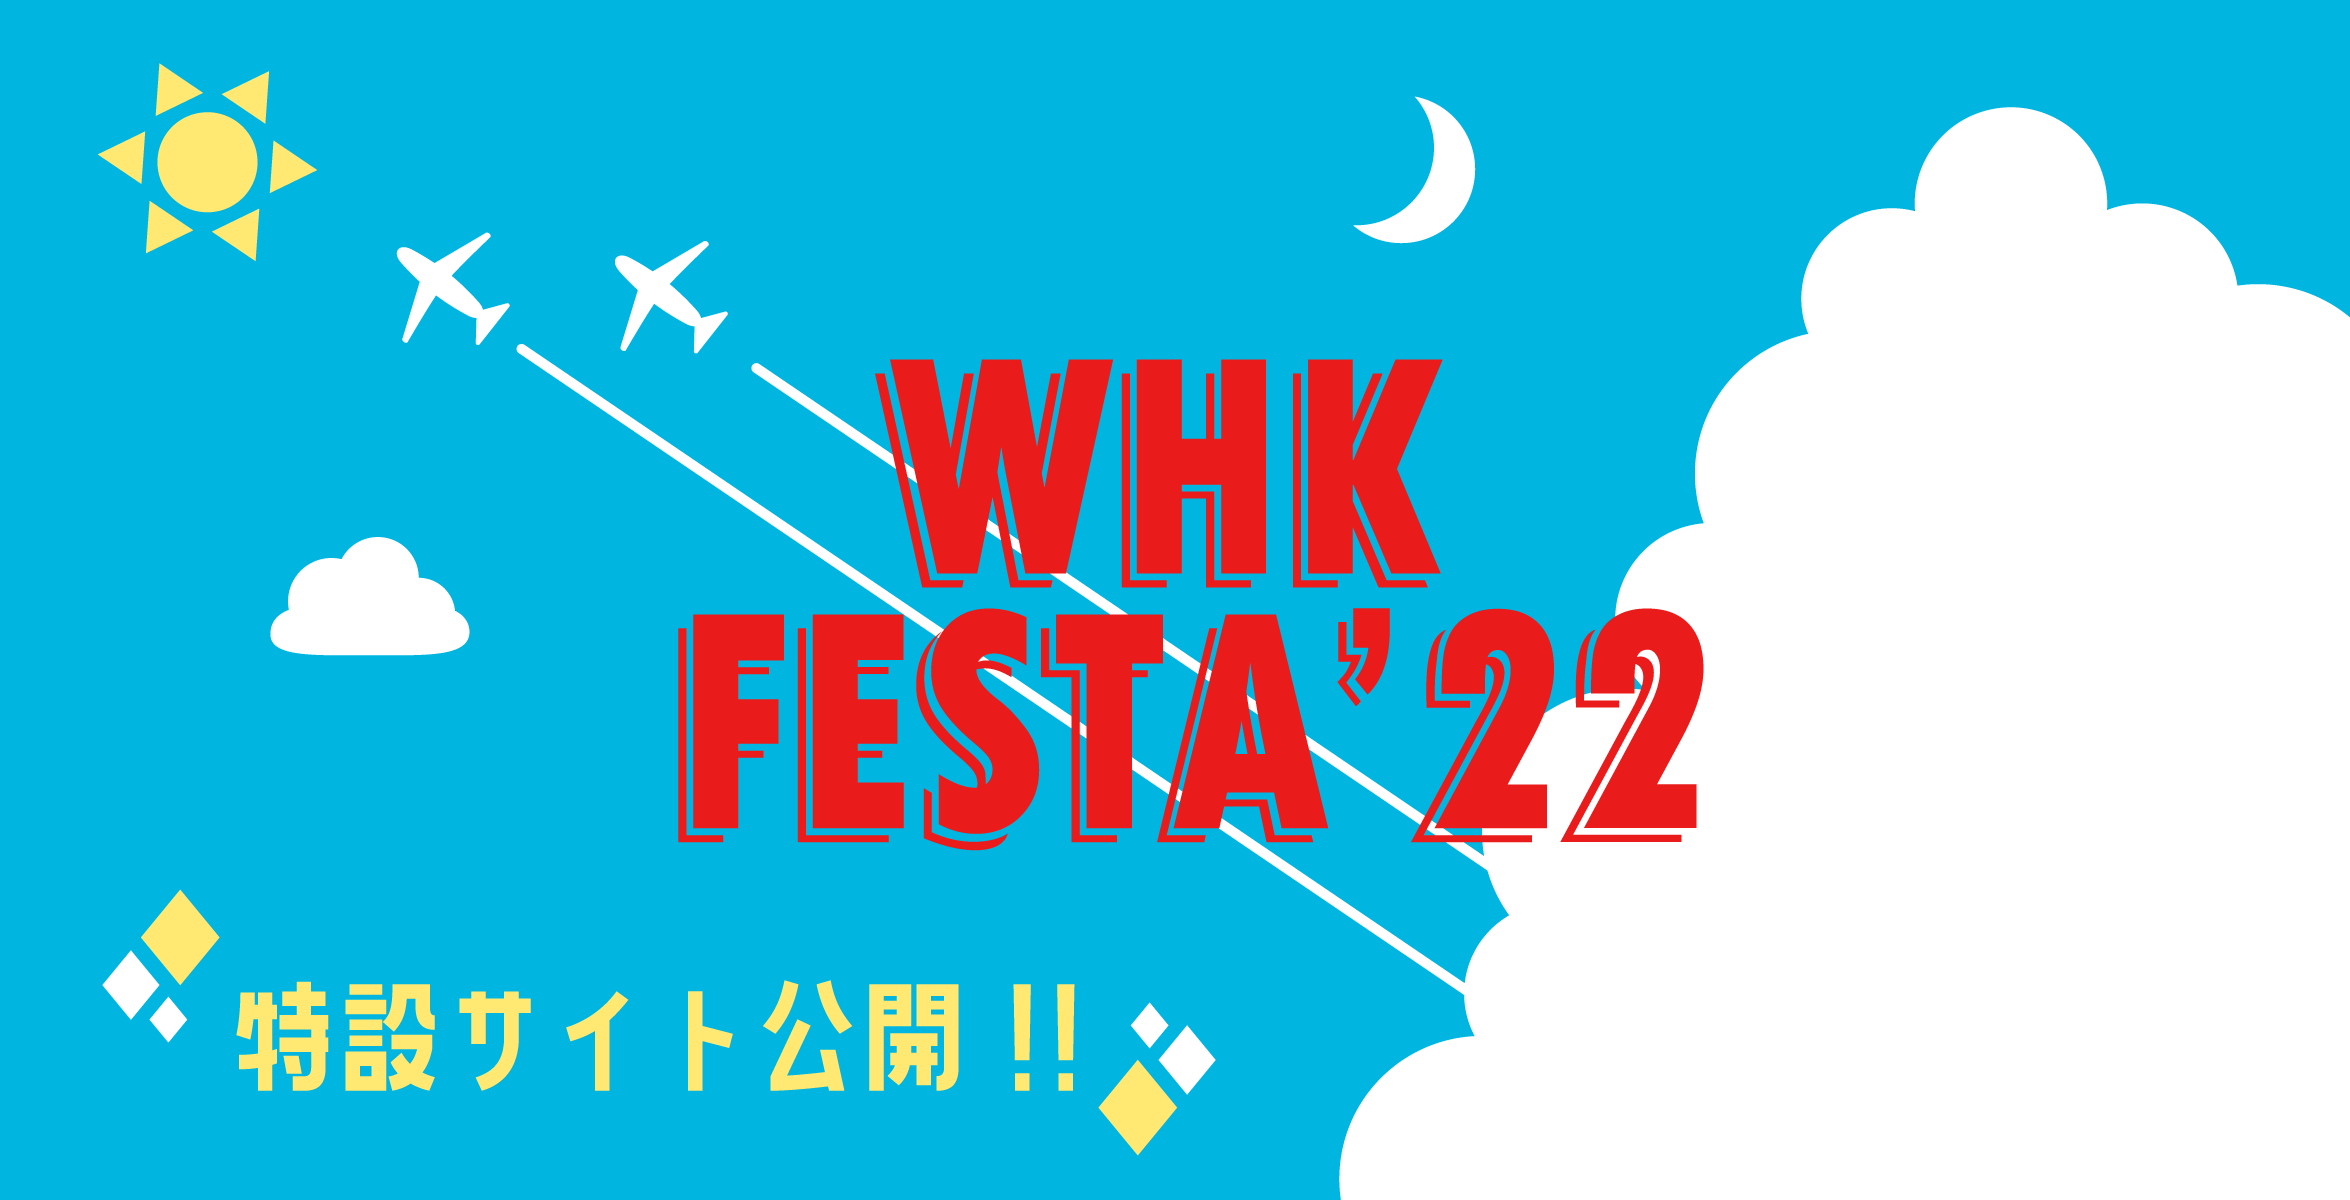 WHKFESTA'22特設サイト